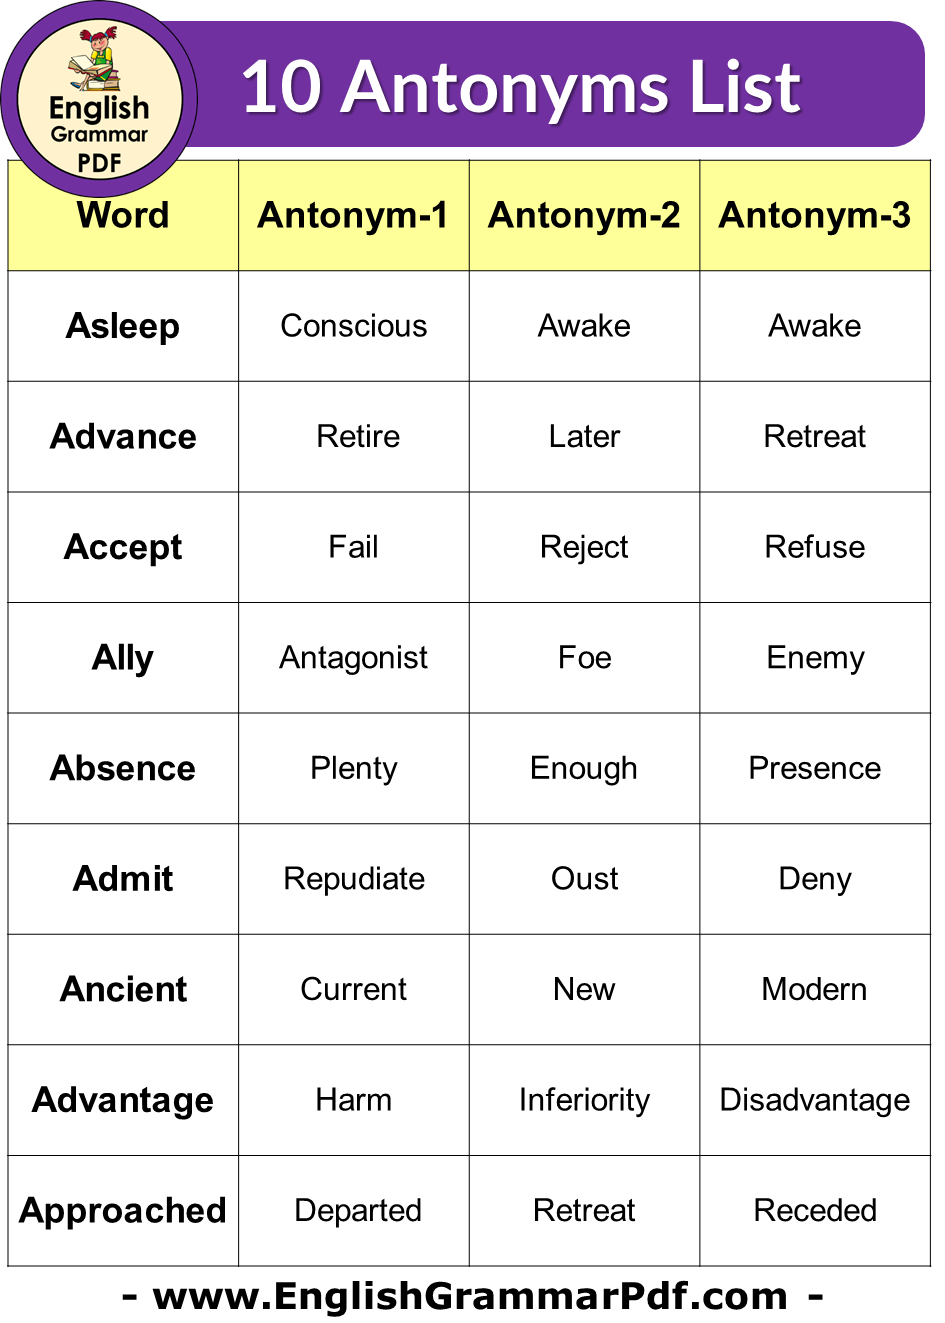 10 Antonyms in English